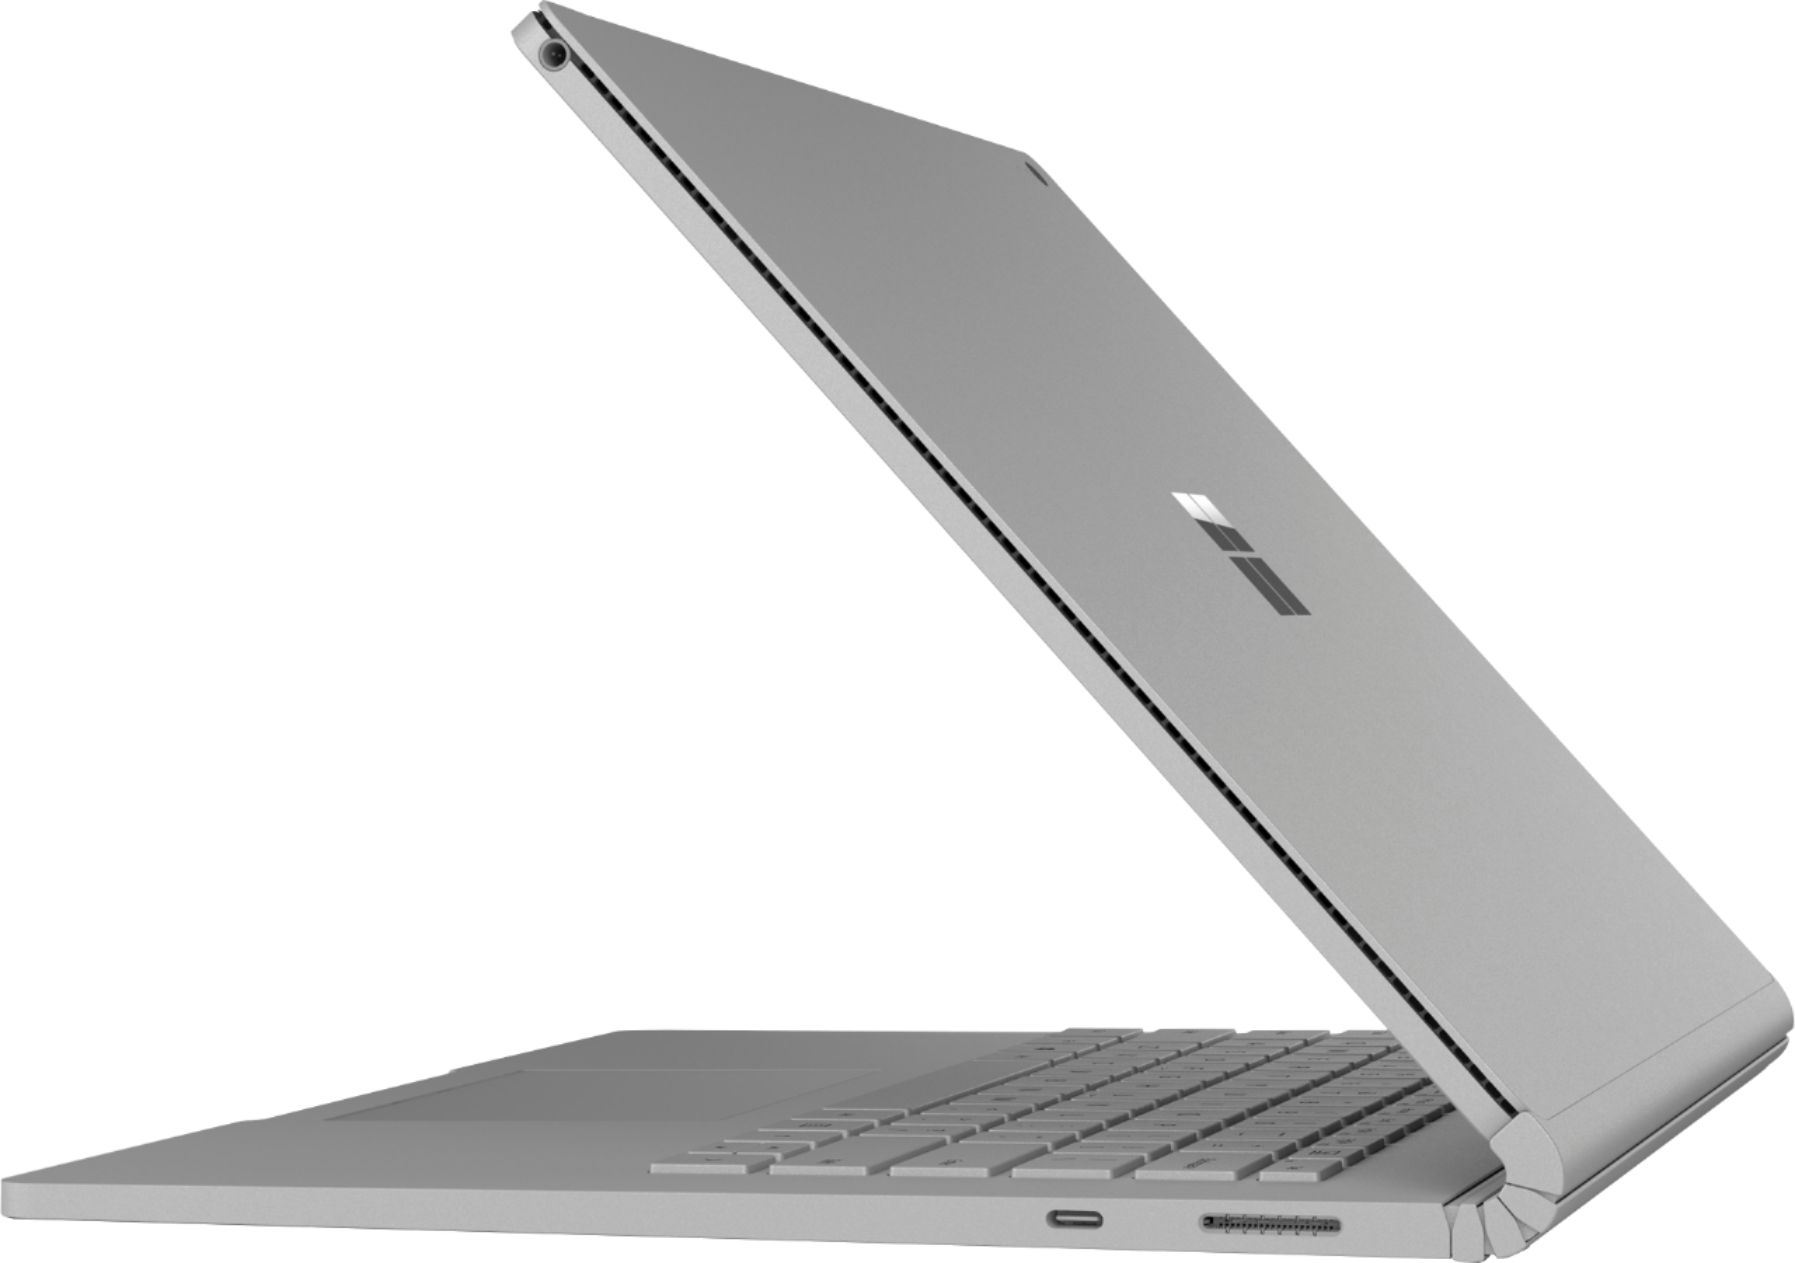 Left View: Microsoft - Geek Squad Certified Refurbished Surface 3 15" Touch-Screen Laptop - AMD Ryzen 5 - 8GB Memory - 256GB SSD - Matte Black